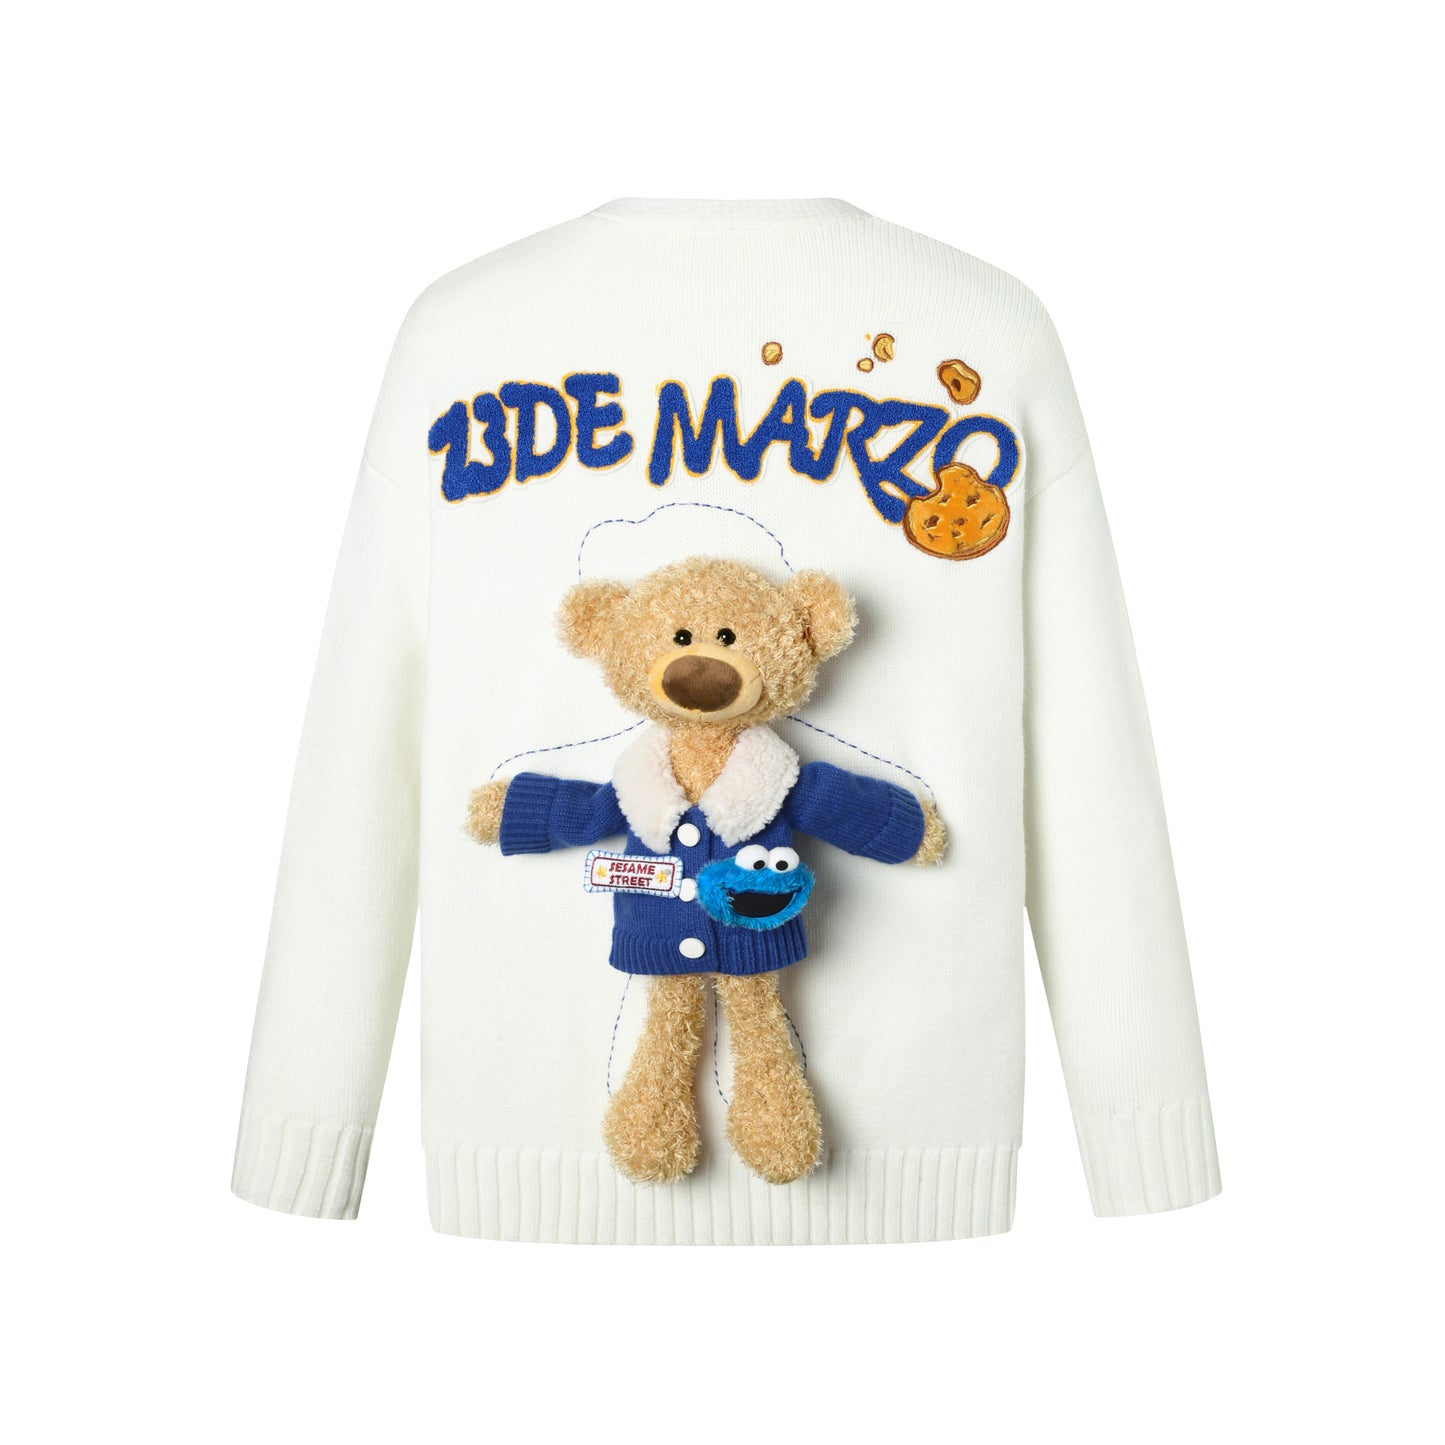 13DE MARZO Cookie Monster Knit Cardigan